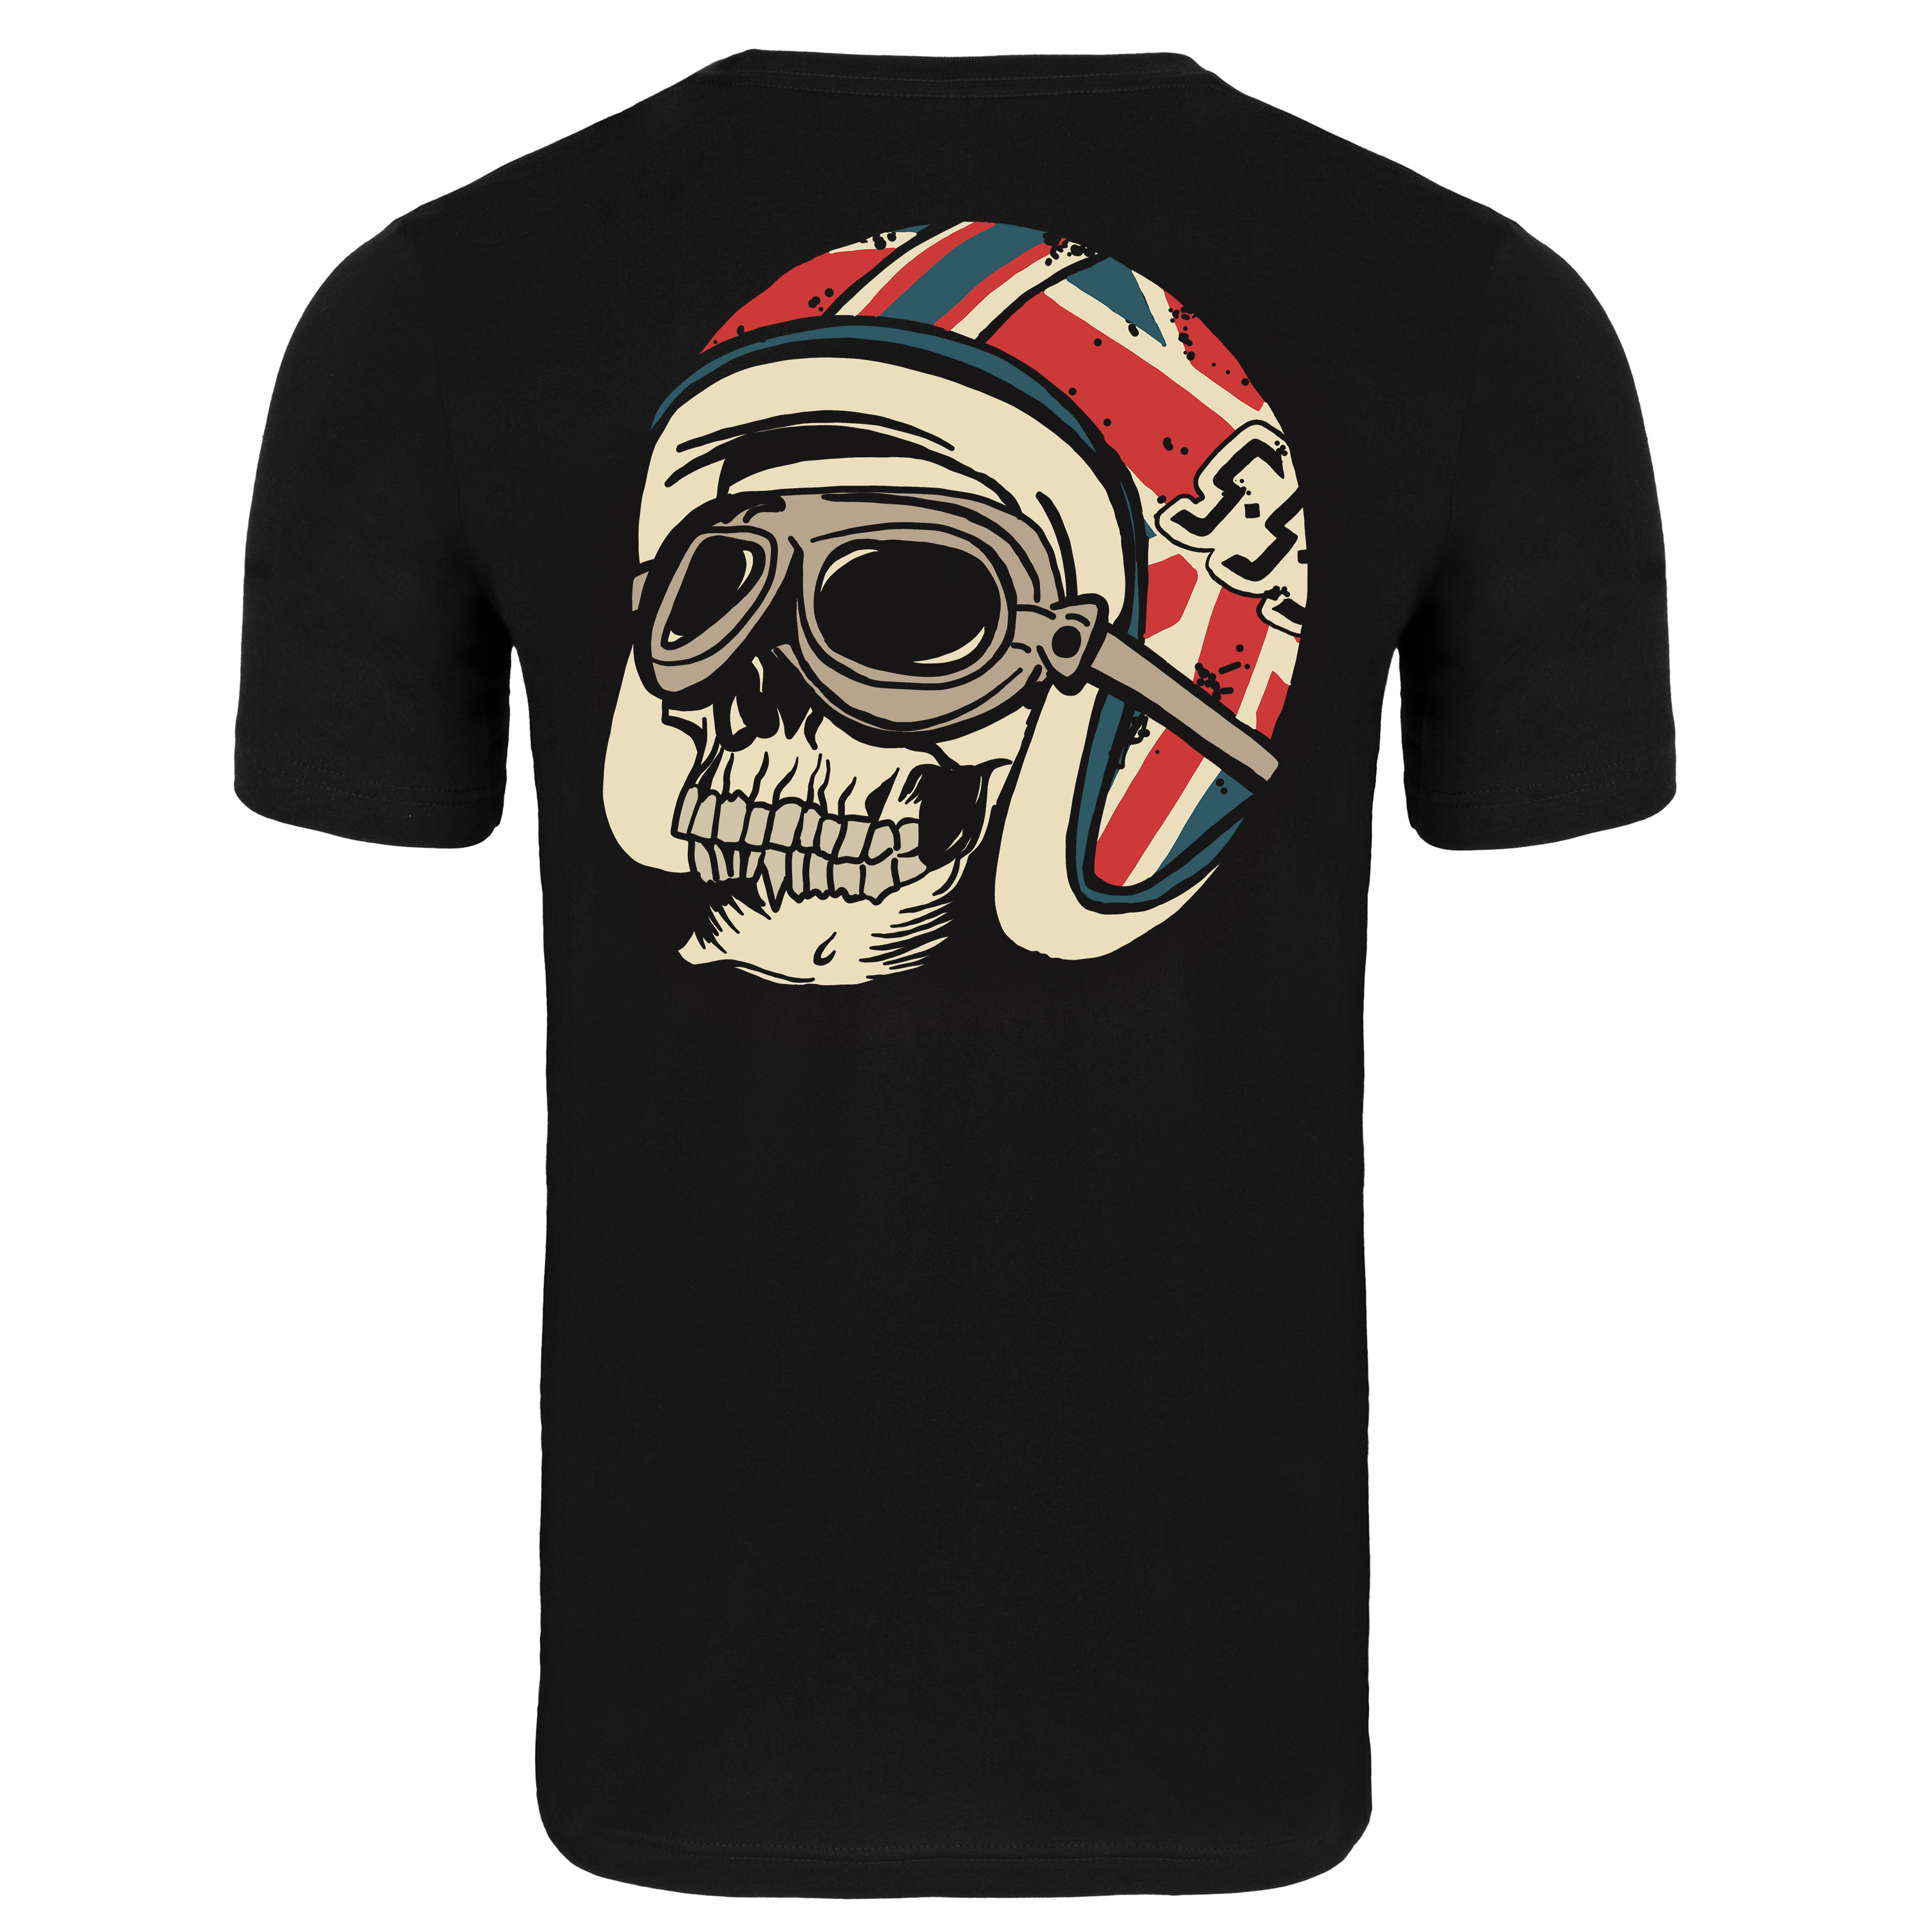 Spitfire Tee Black With Union Skull Helmet Logo